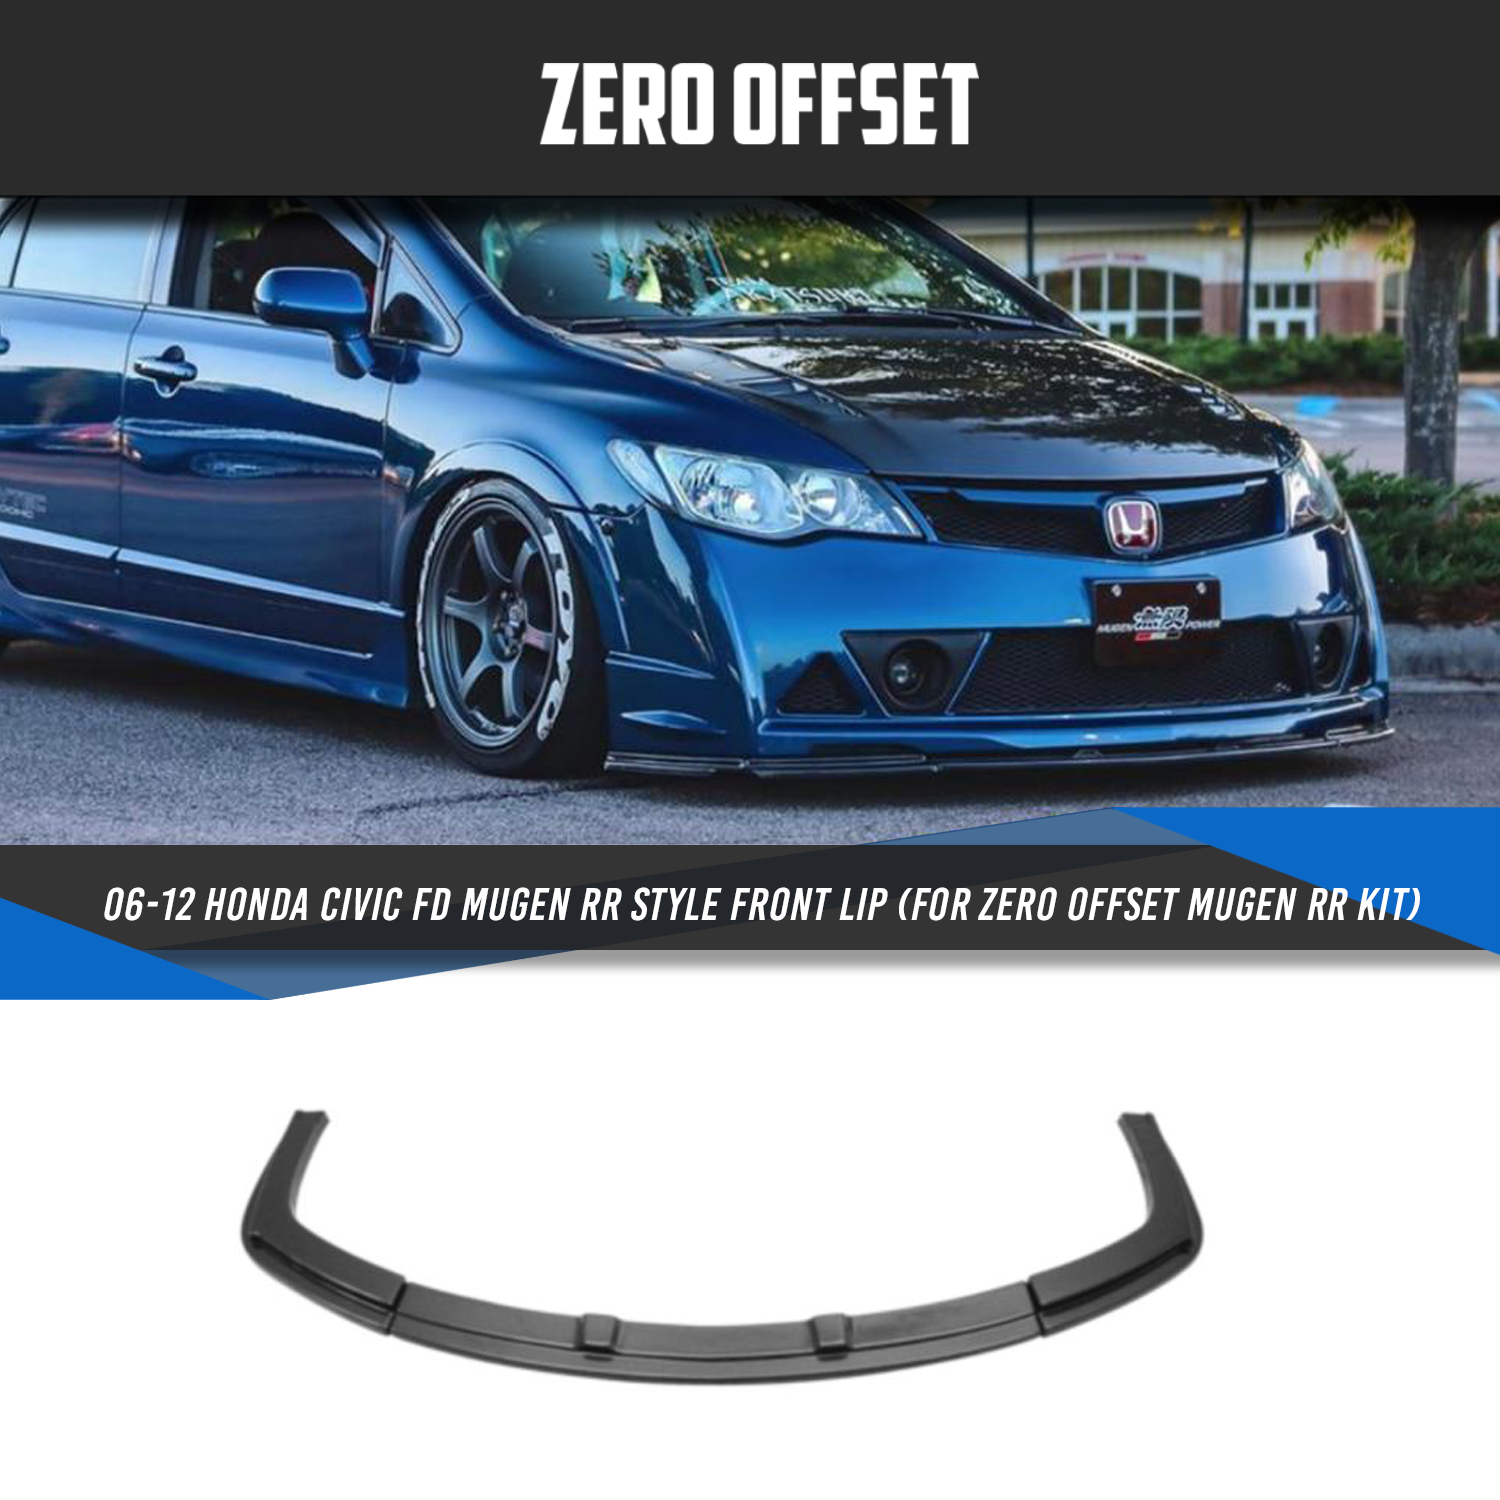 Zero Offset  Mugen RR Style Front Lip for 06-12 Honda Civic FD (Suits Zero Offset Mugen RR Kit) - MODE Auto Concepts